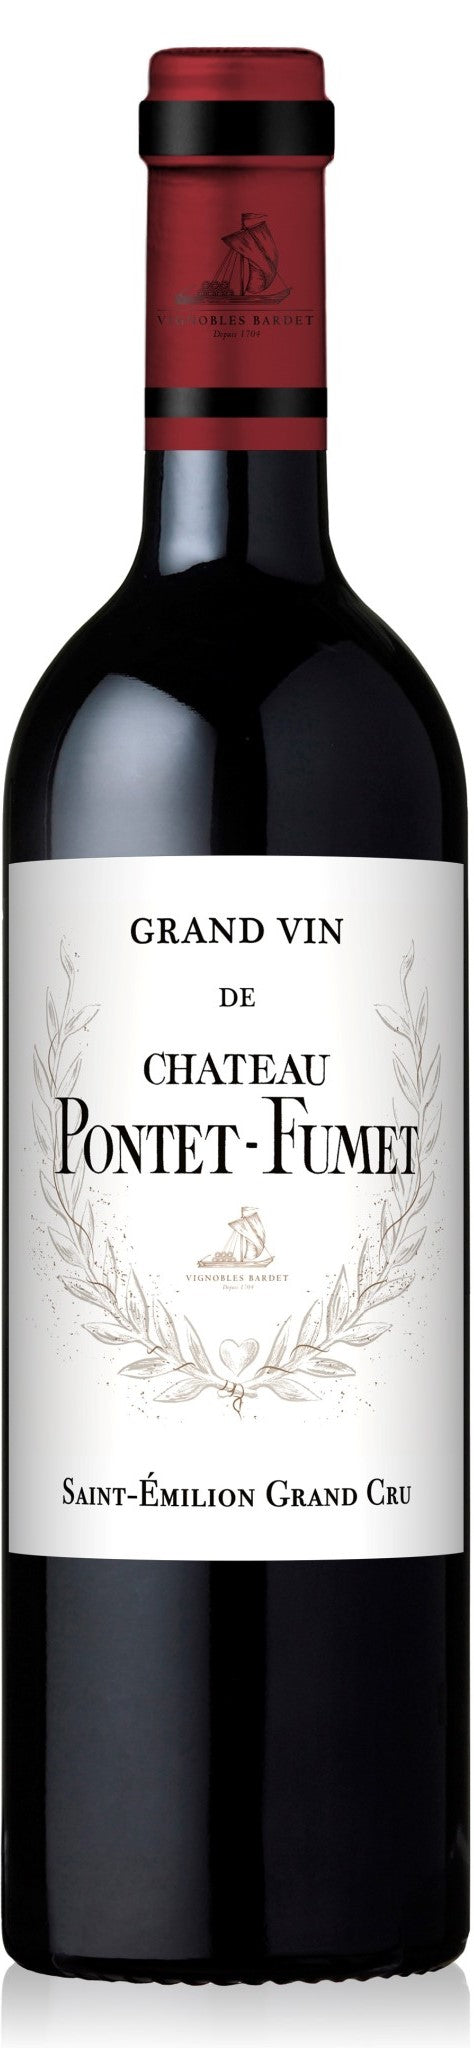 Chateau Pontet-Fumet Saint Emilion Grand Cru 2016 750-12 2016